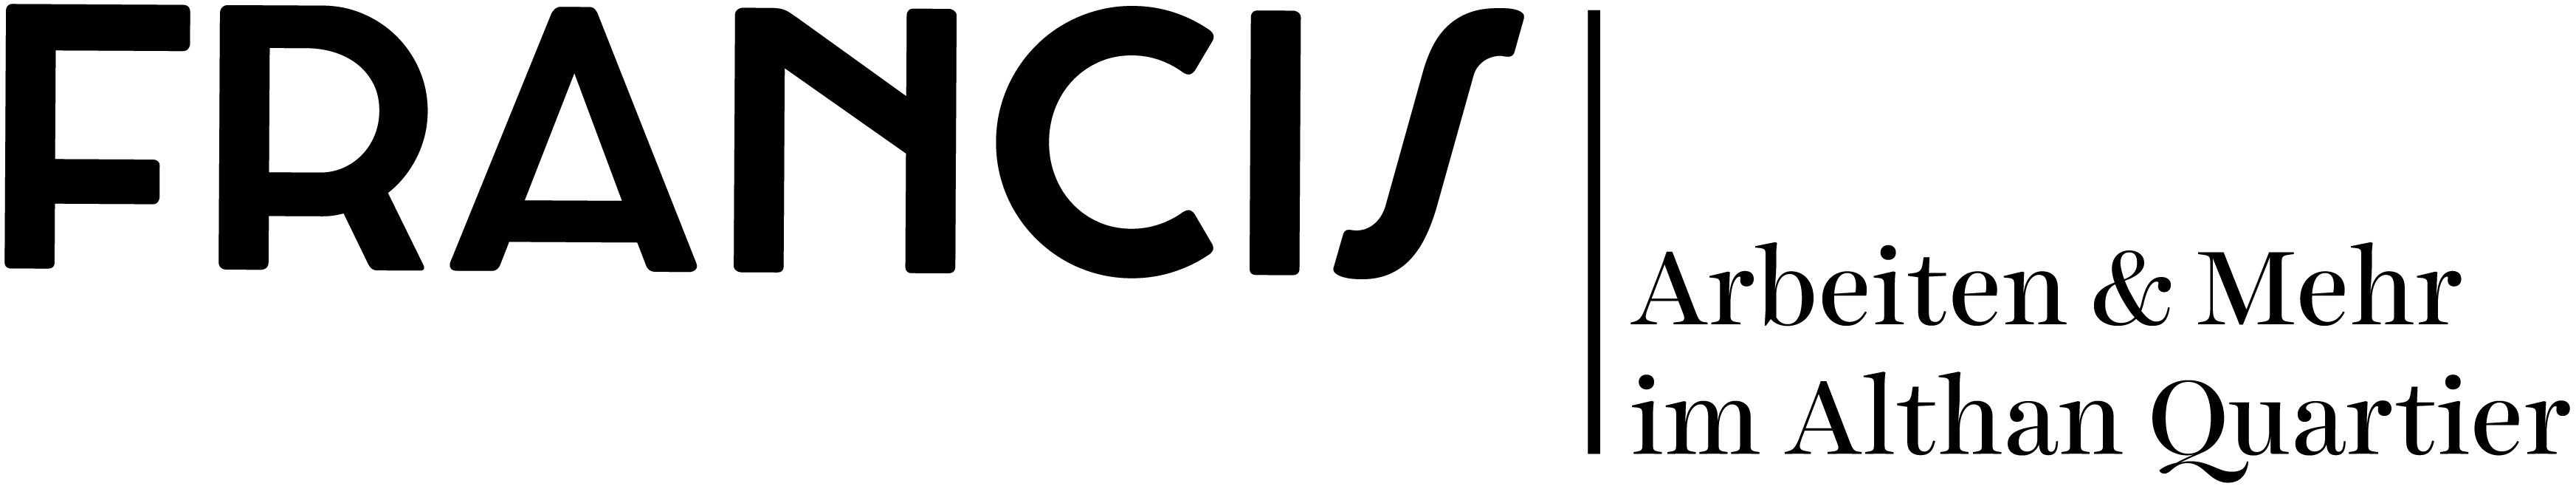 francis logo